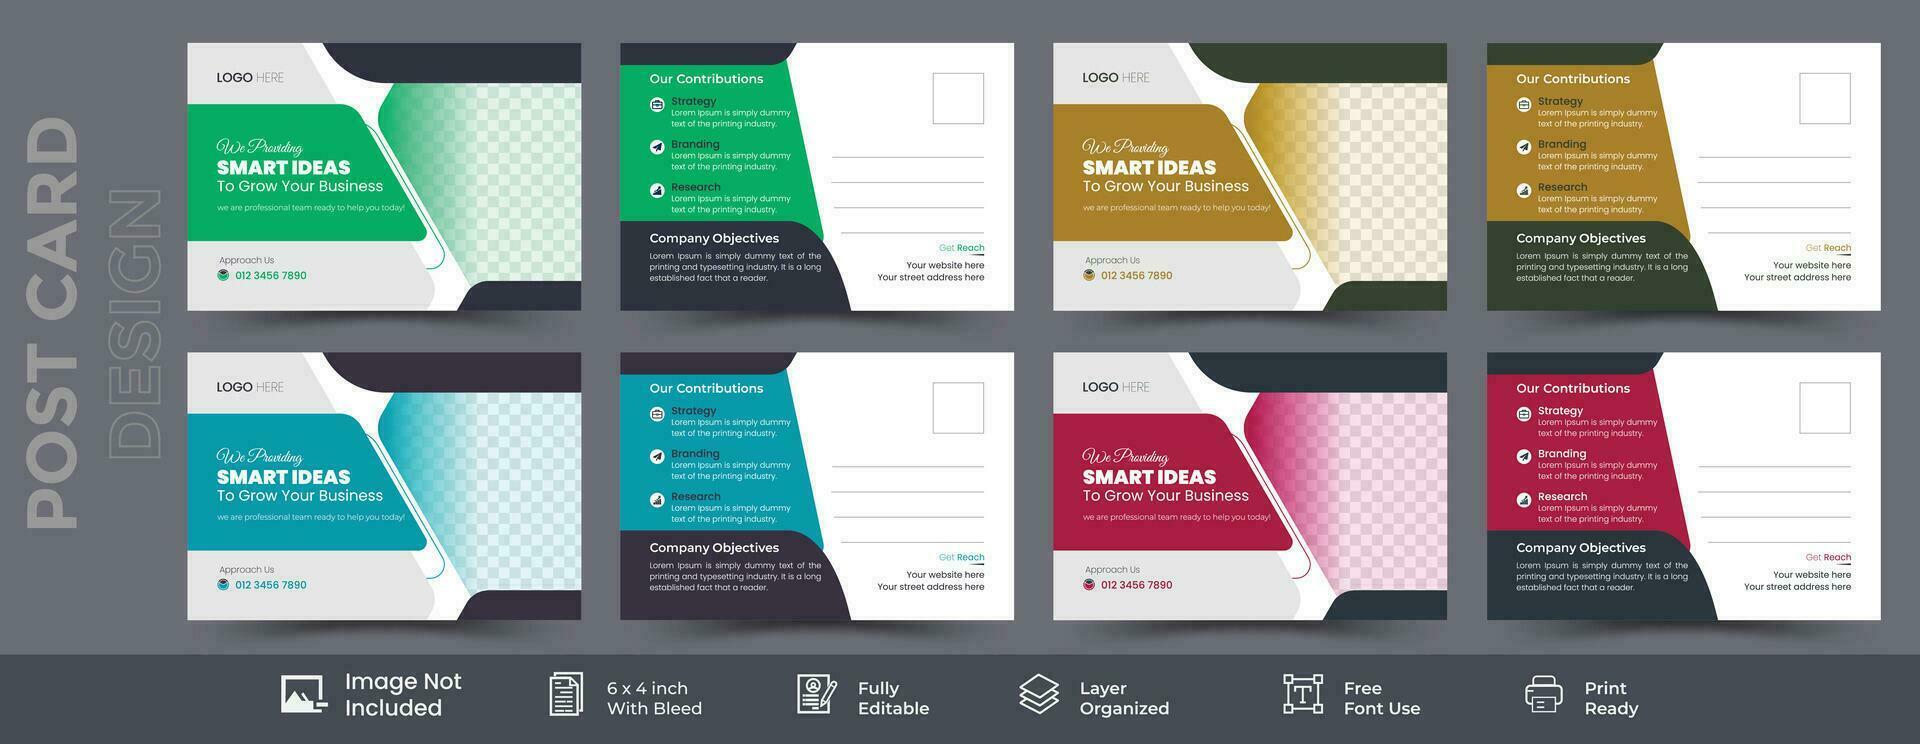 Vector corporate professional business marketing postcard template